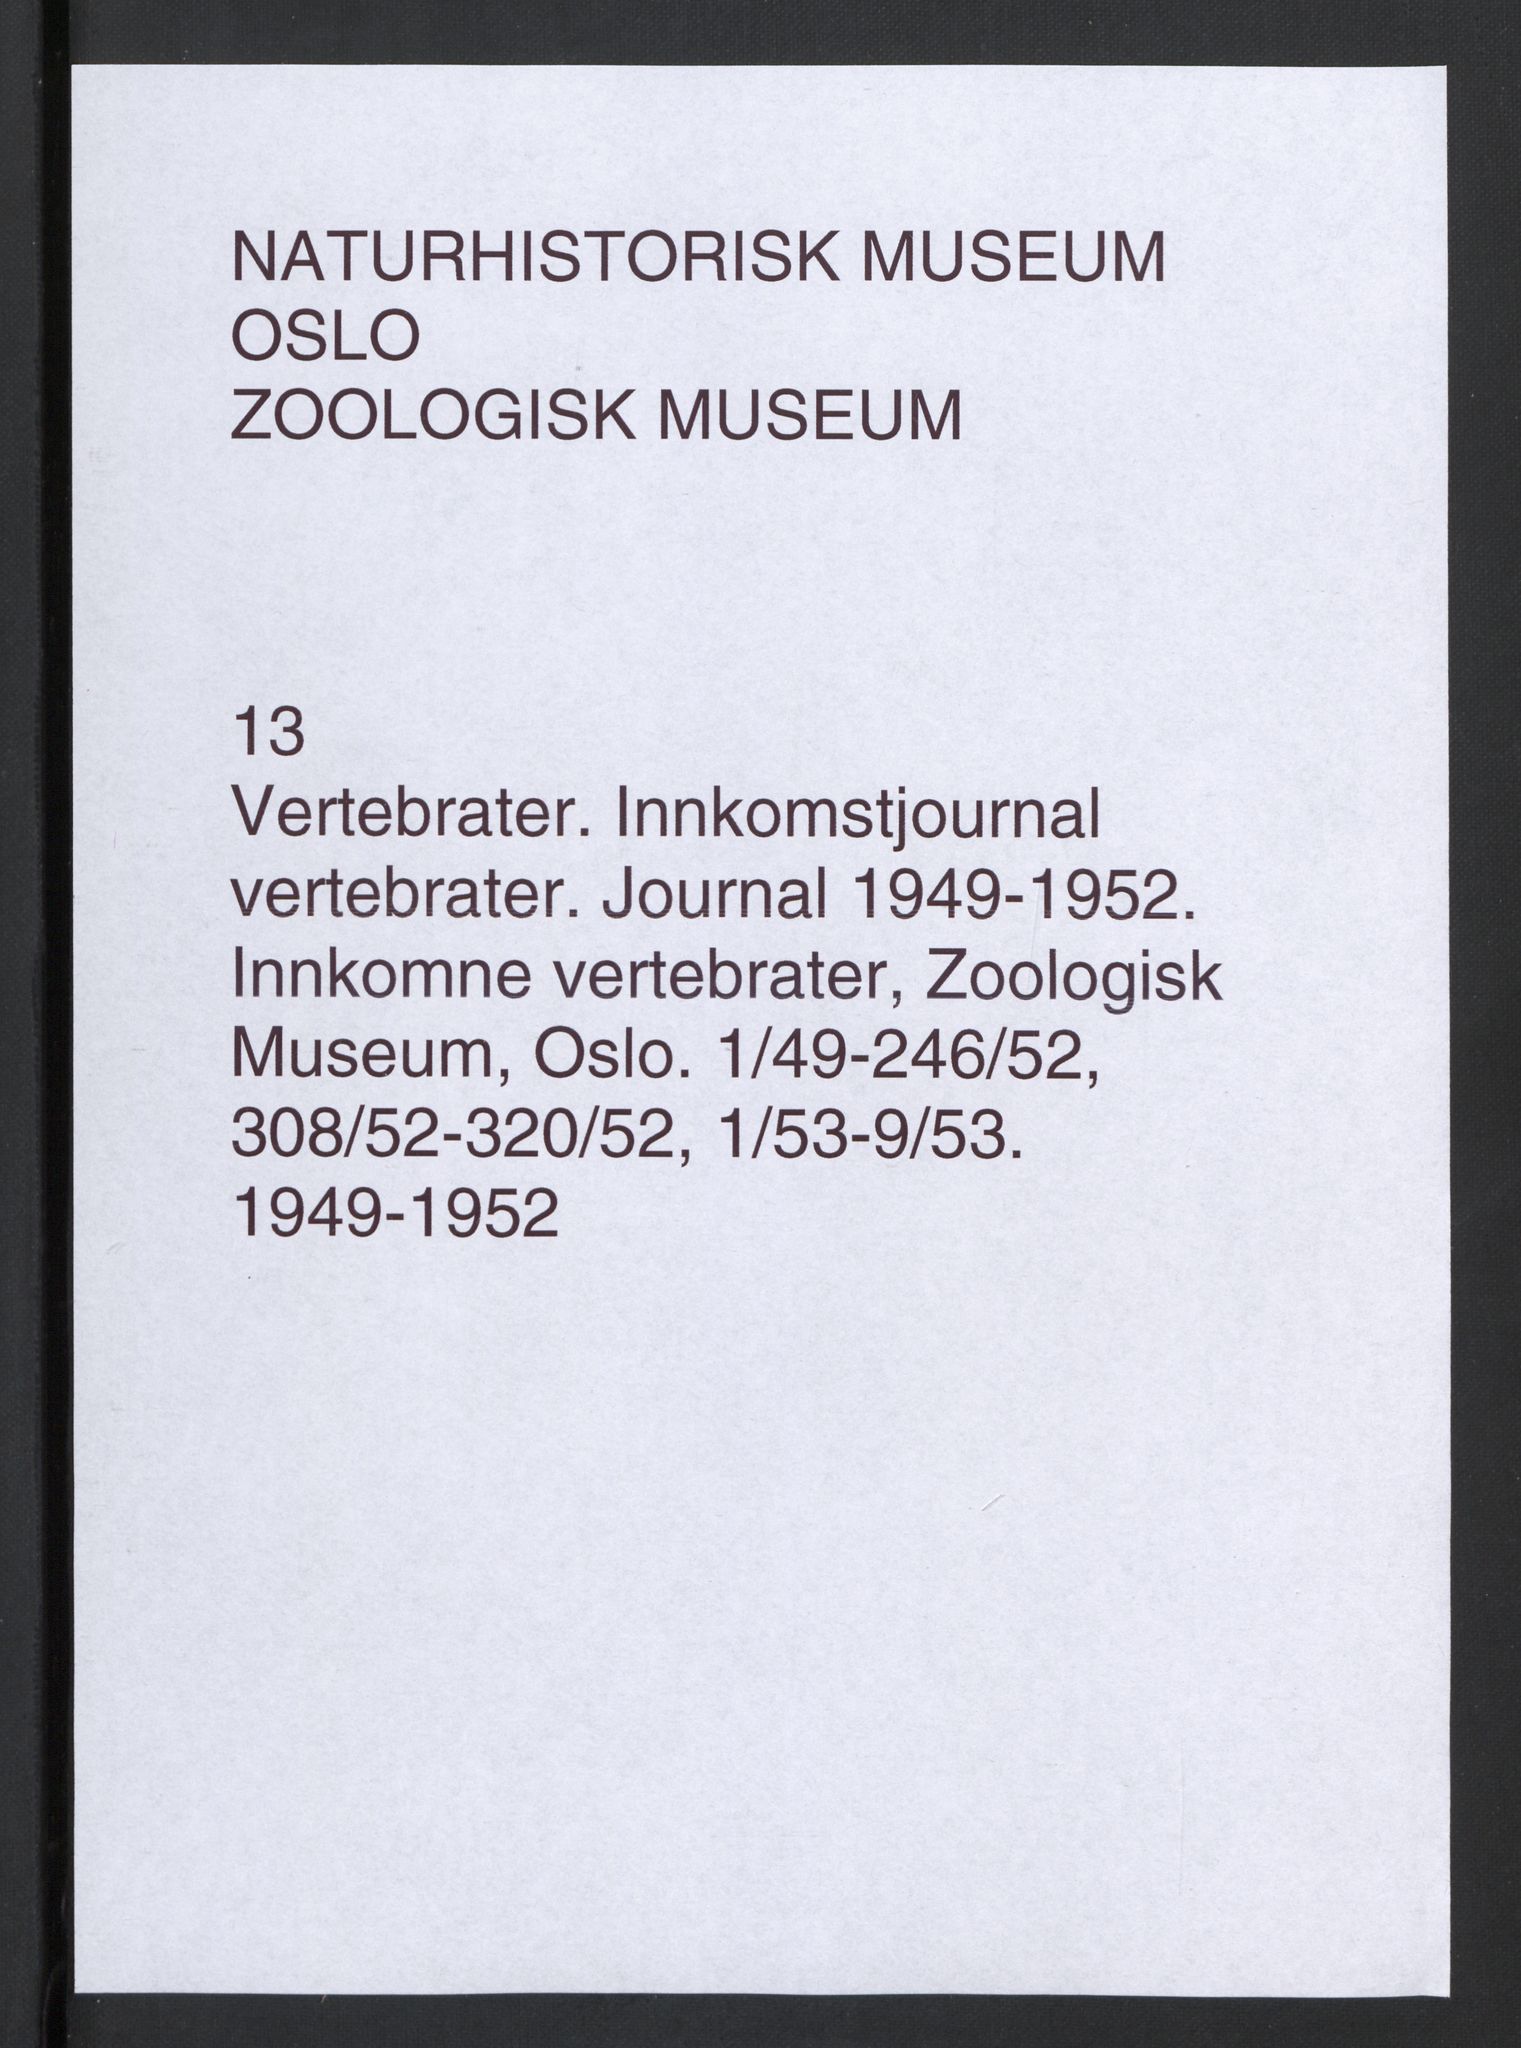 Naturhistorisk museum (Oslo), NHMO/-/5, 1949-1952